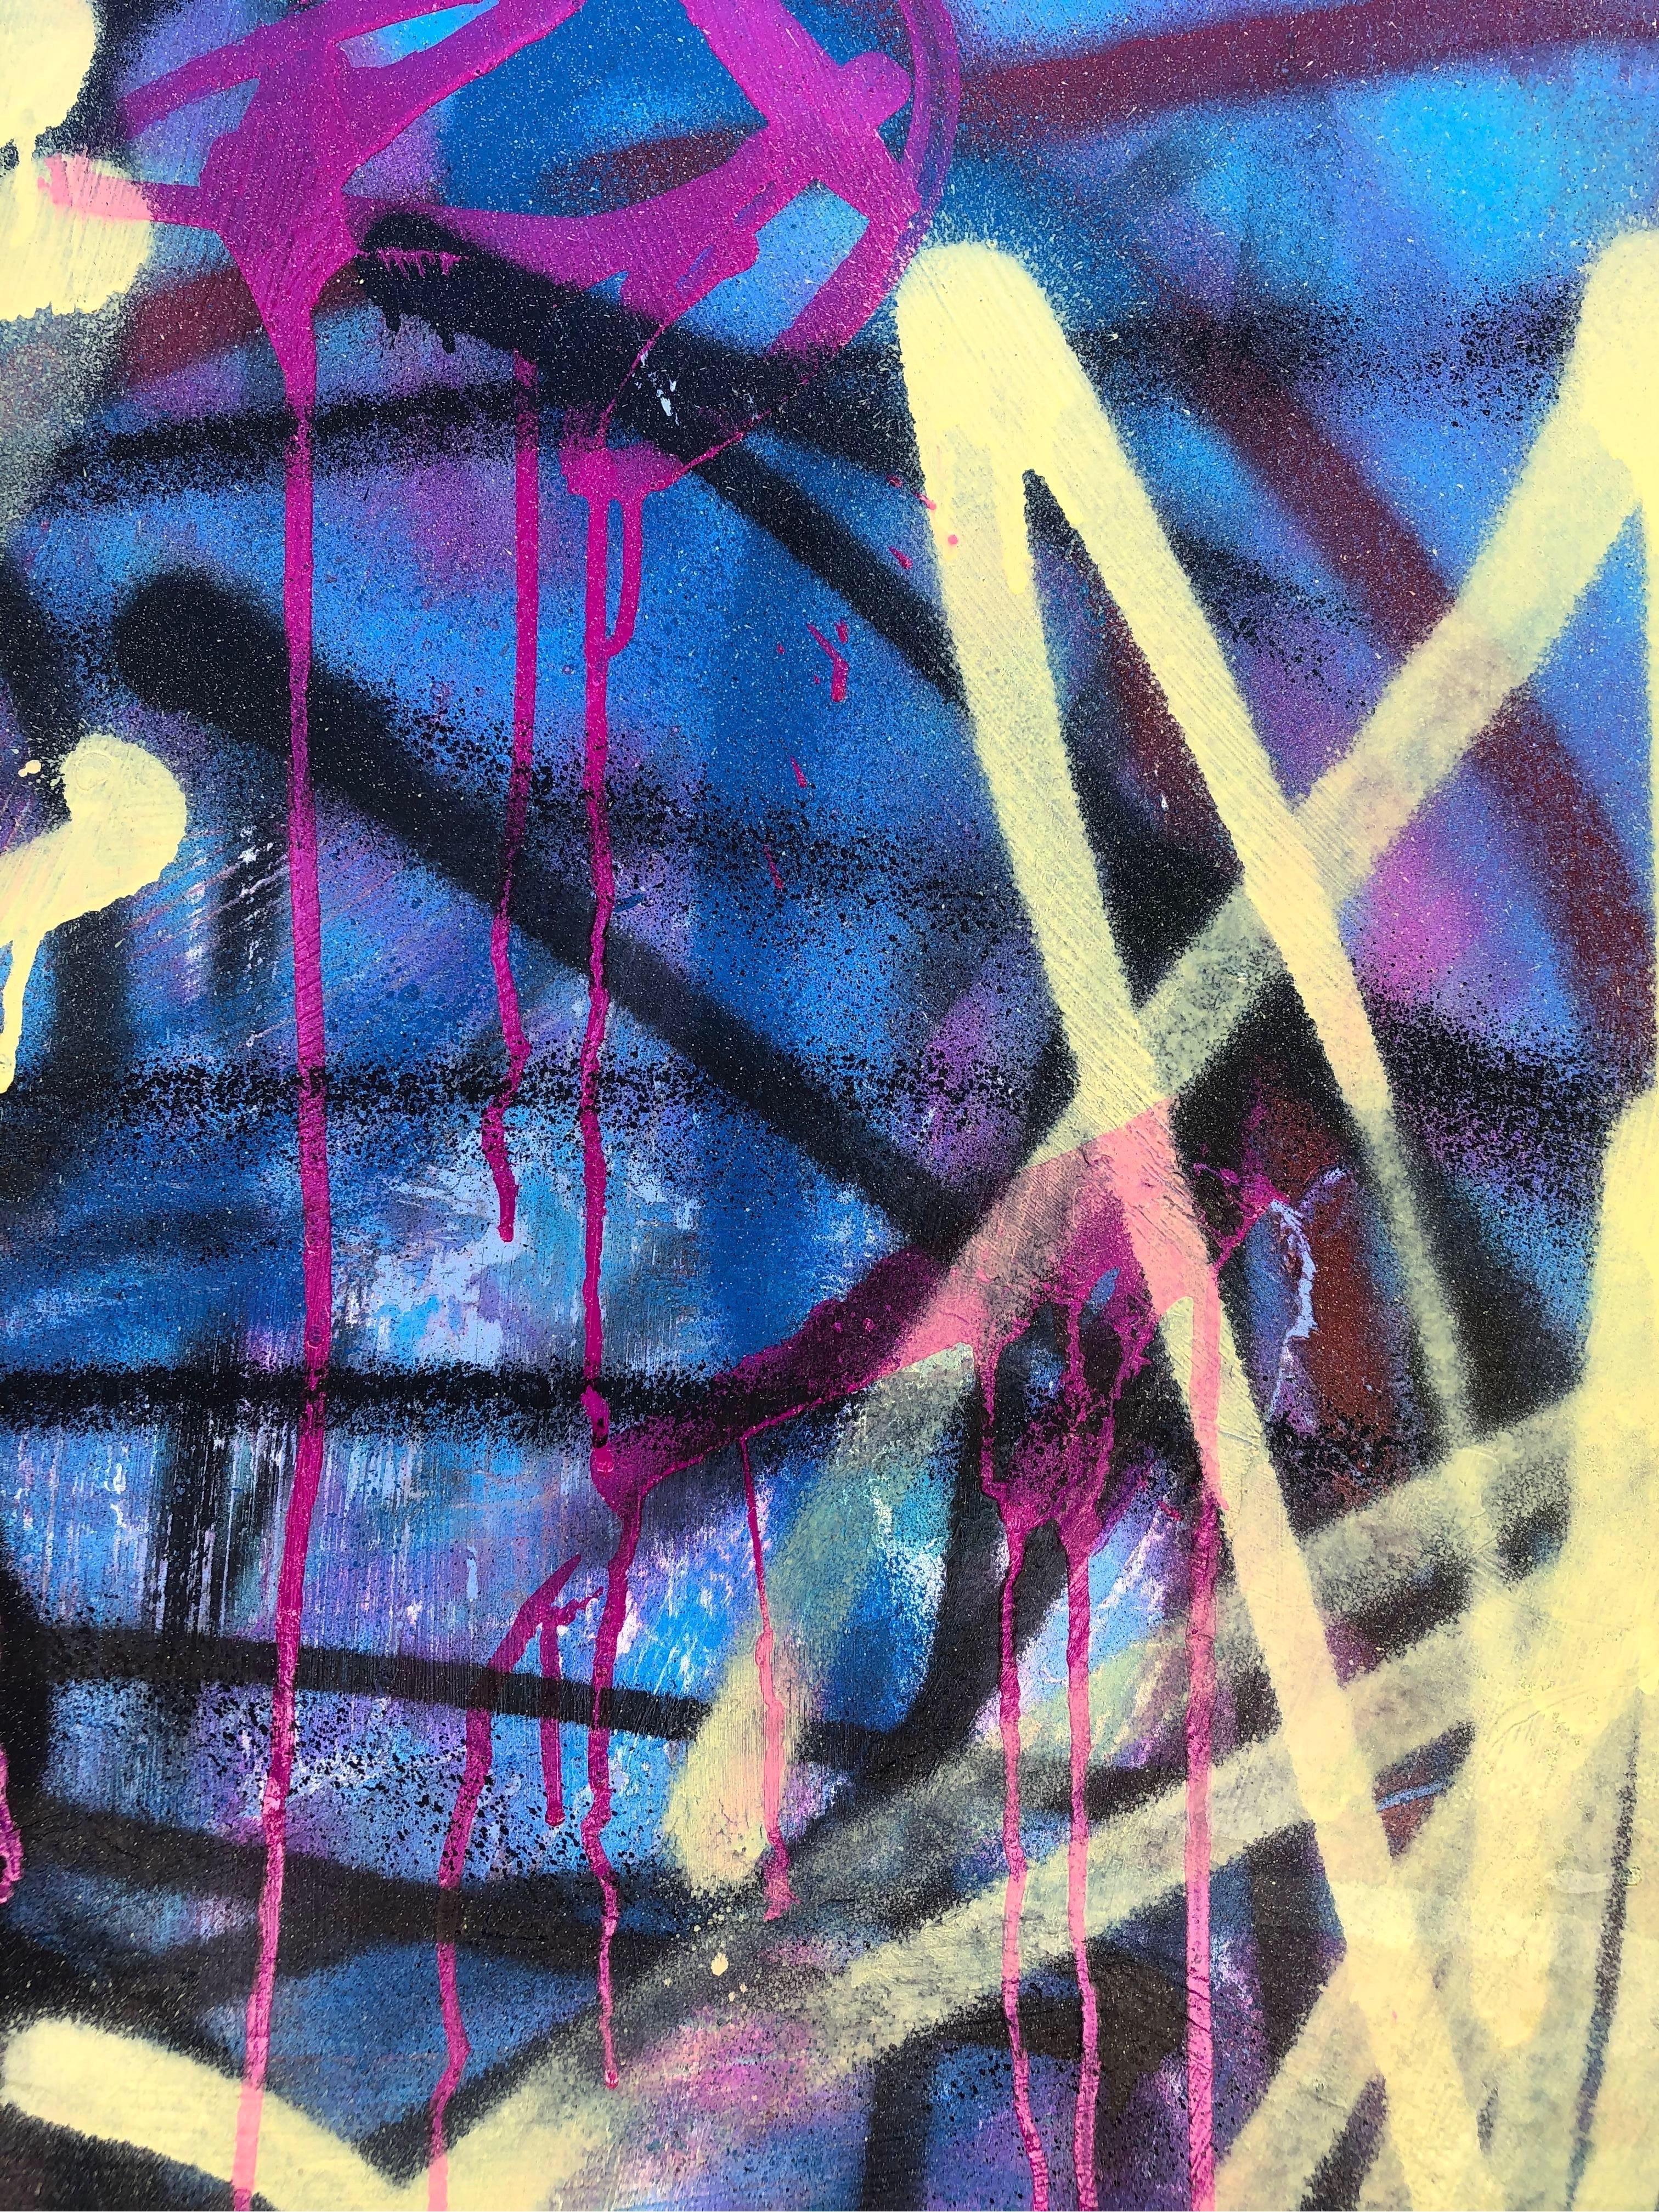 Abstract Street Art Painting on Panel 2